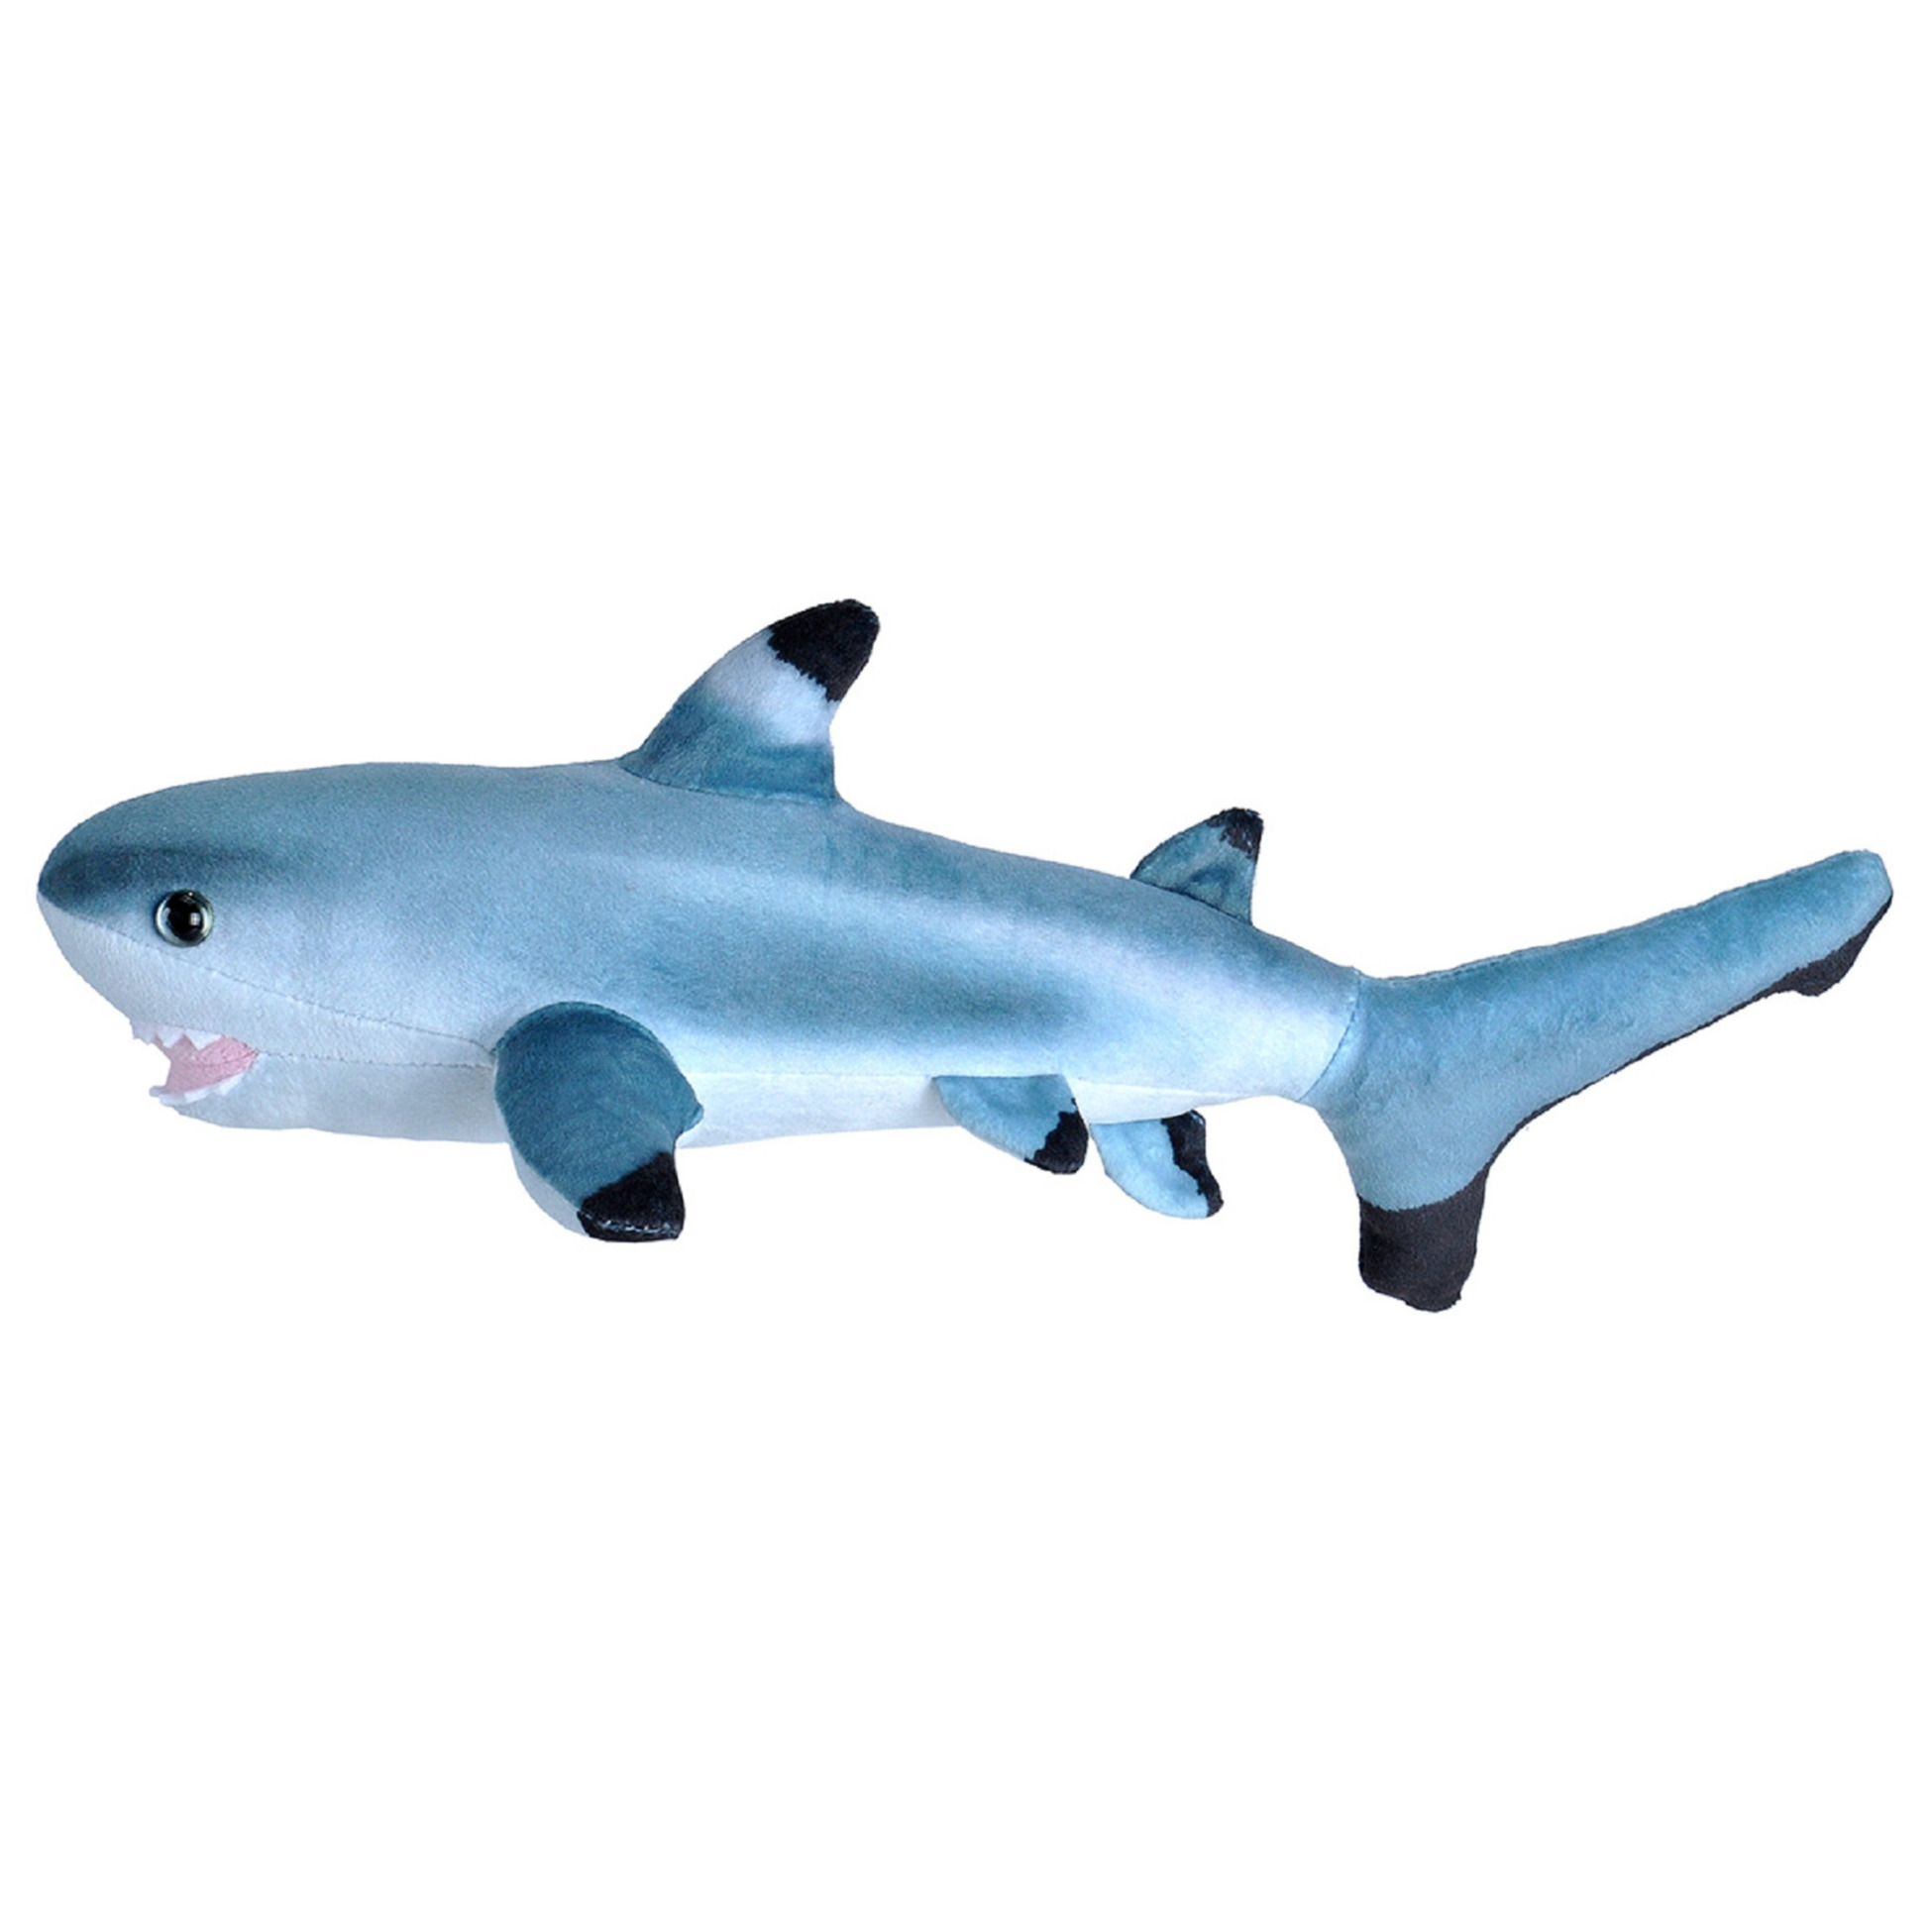 Pluche knuffel zwartpunt haai van 35 cm